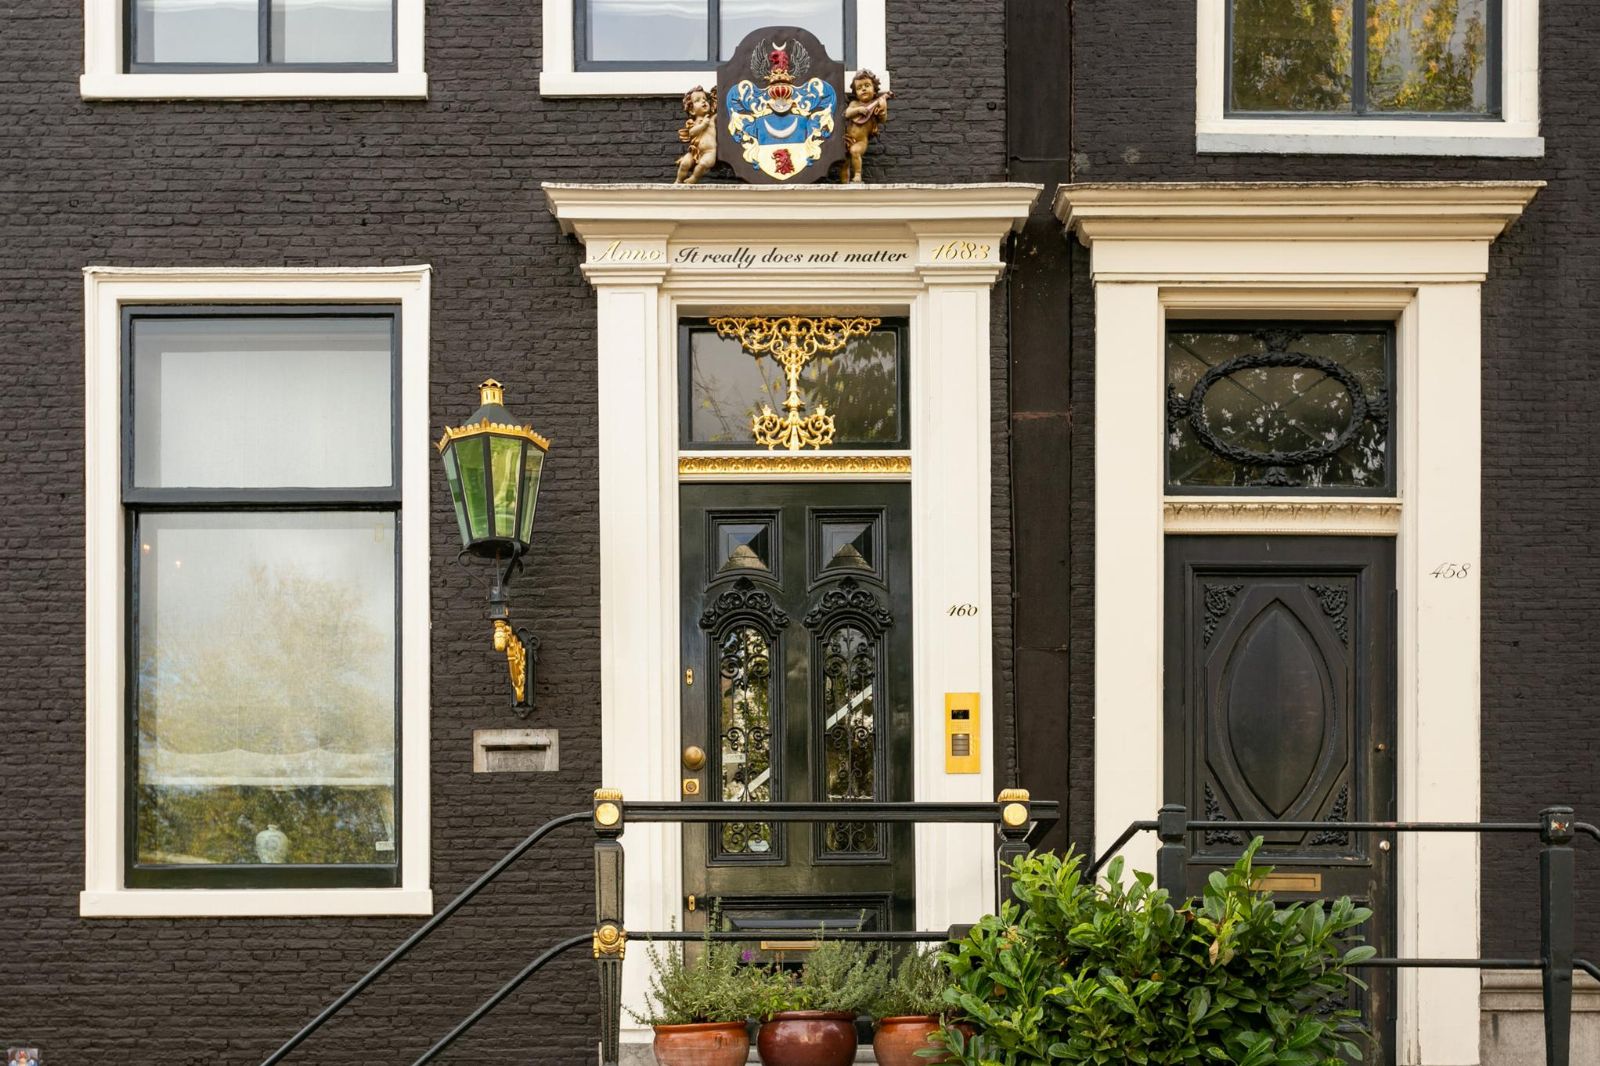 Keizersgracht 460 - Amsterdam